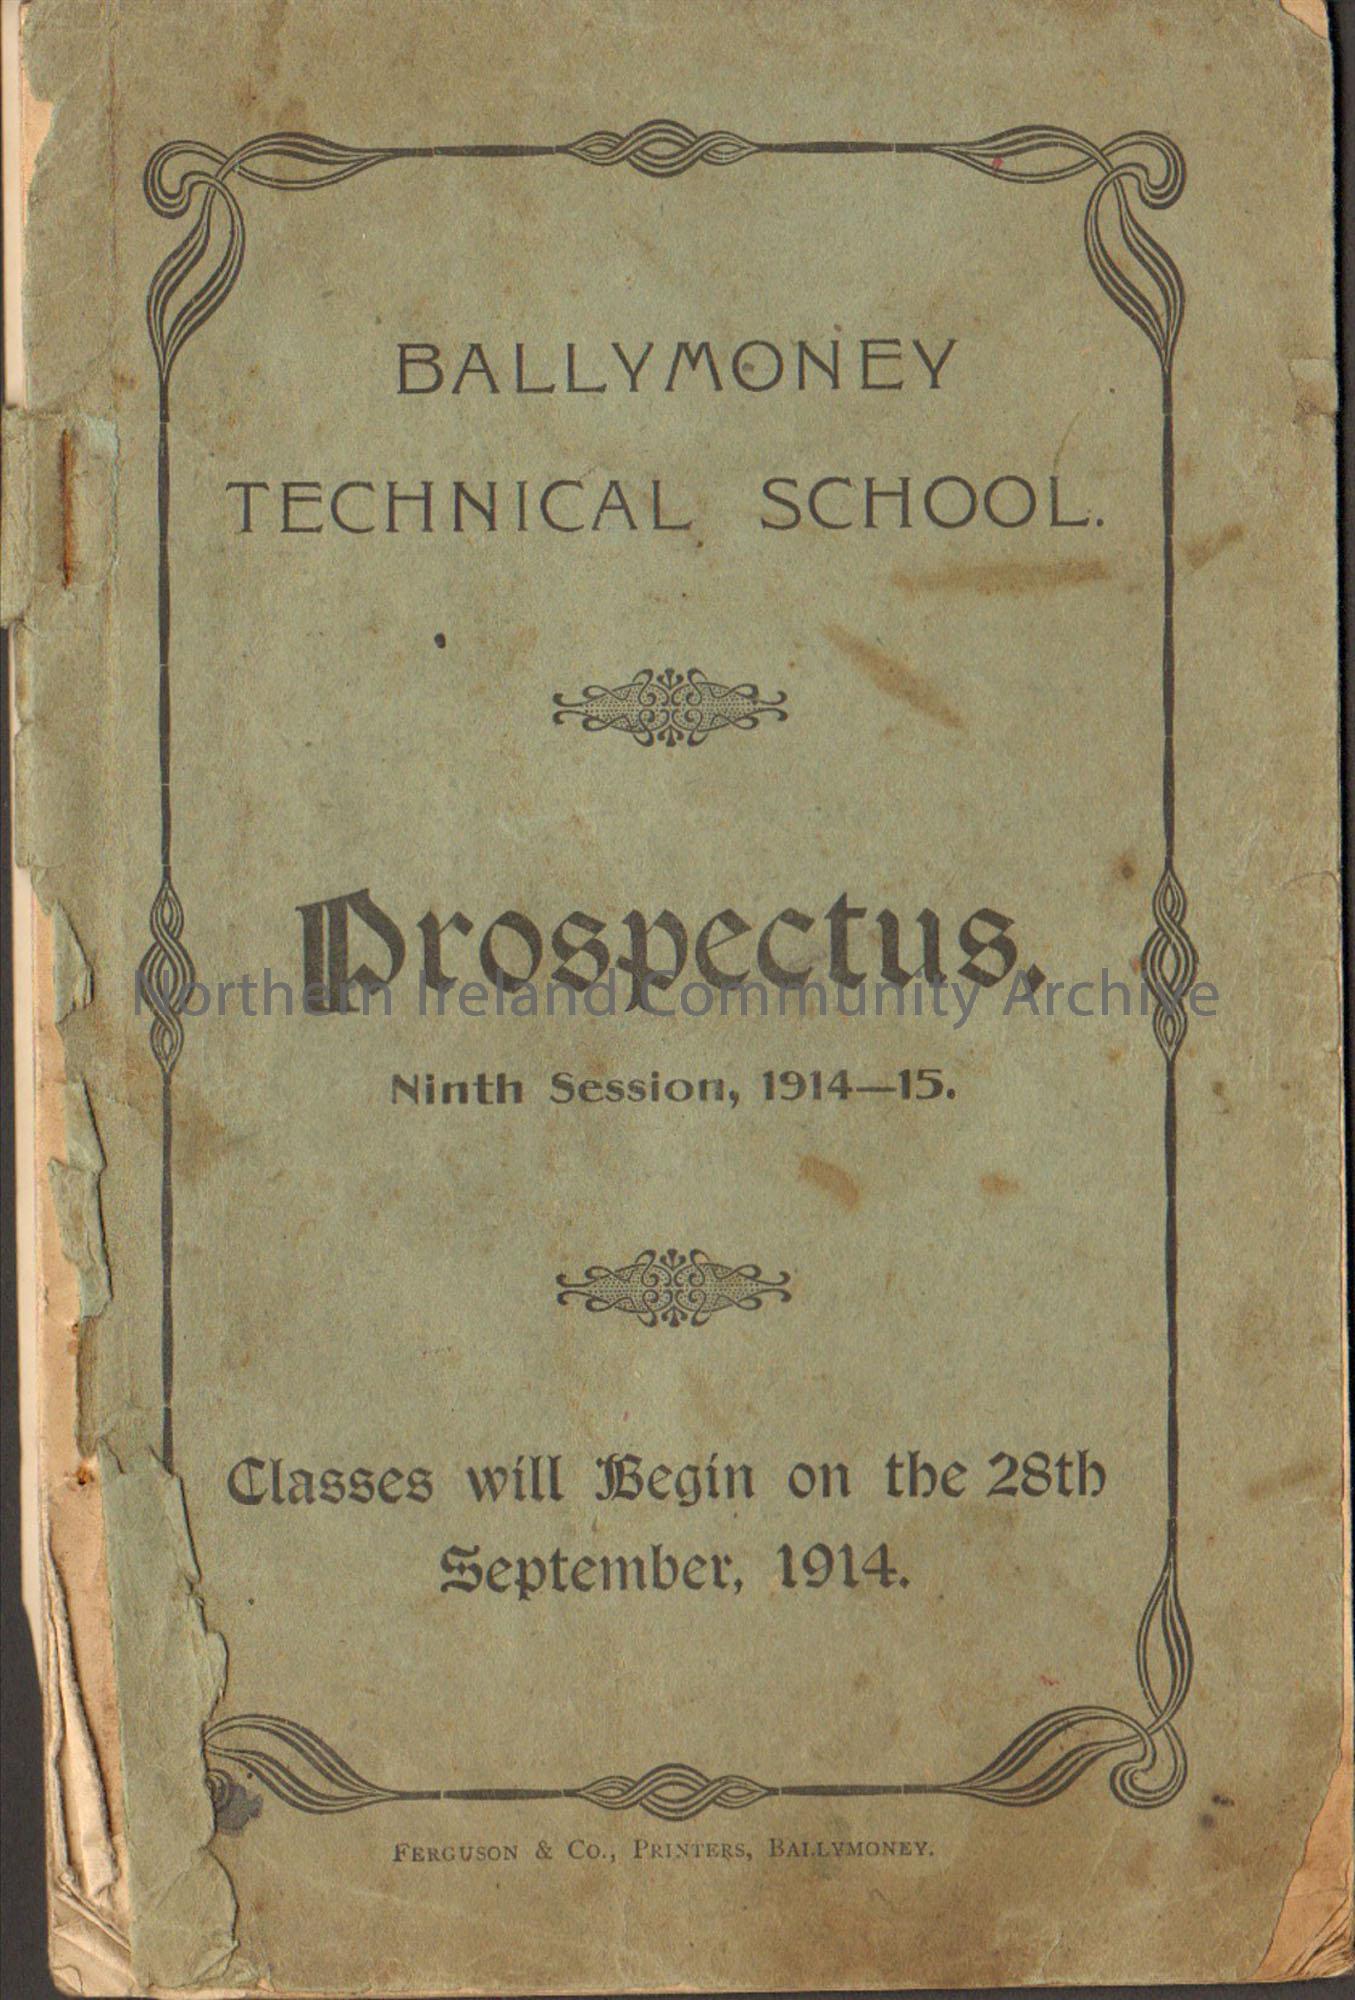 Green booklet. Ballymoney technical School Prospectus, Ninth Session, 1914-15